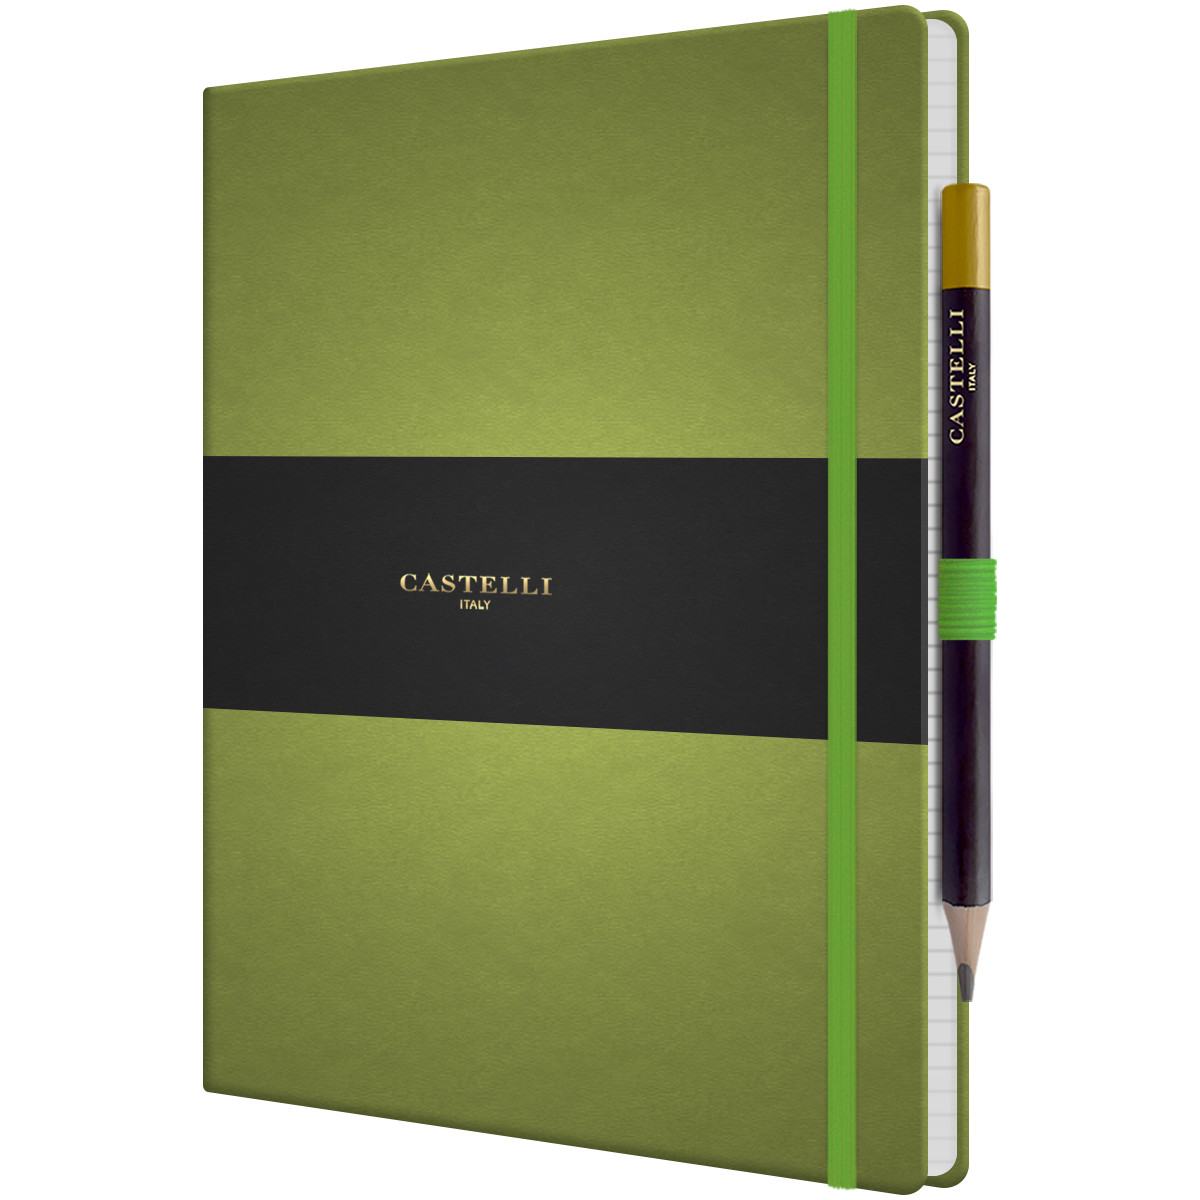 Castelli Tucson Hardback Large Notebook - Ruled - Bright Green